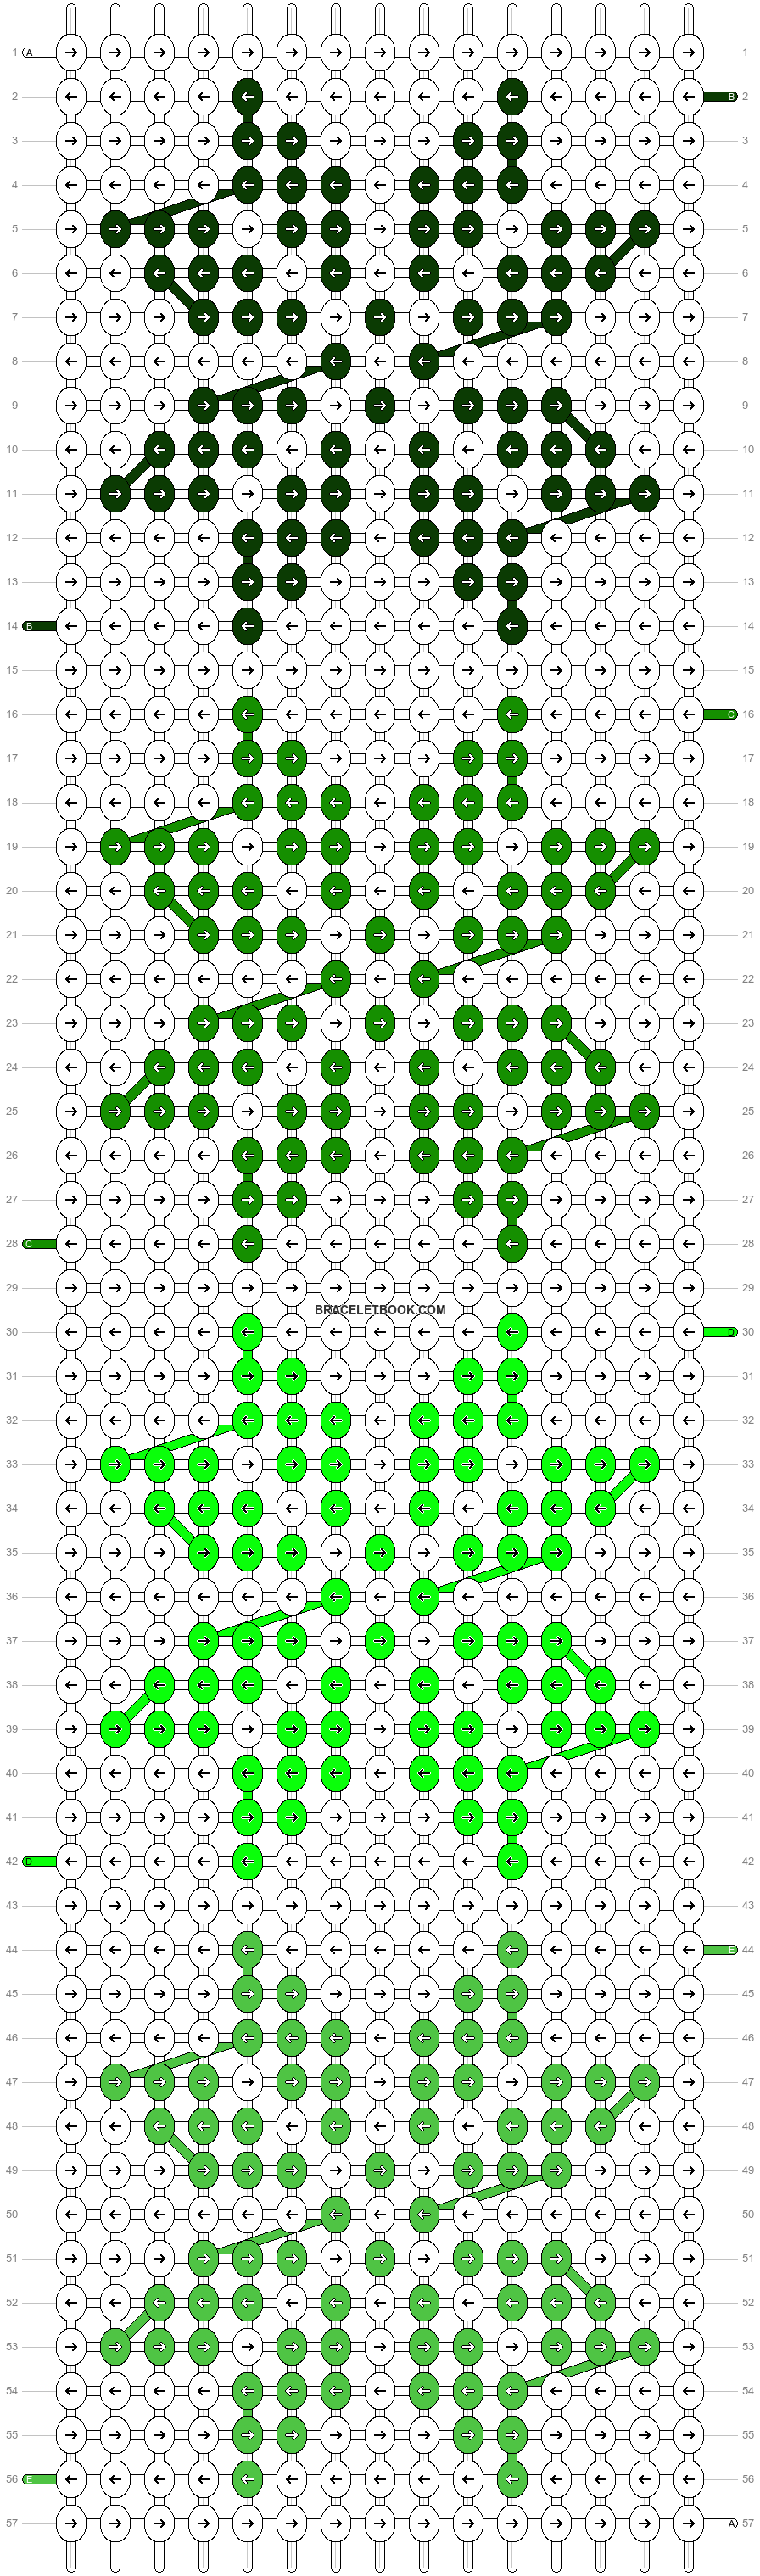 Alpha pattern #48750 variation #113247 pattern